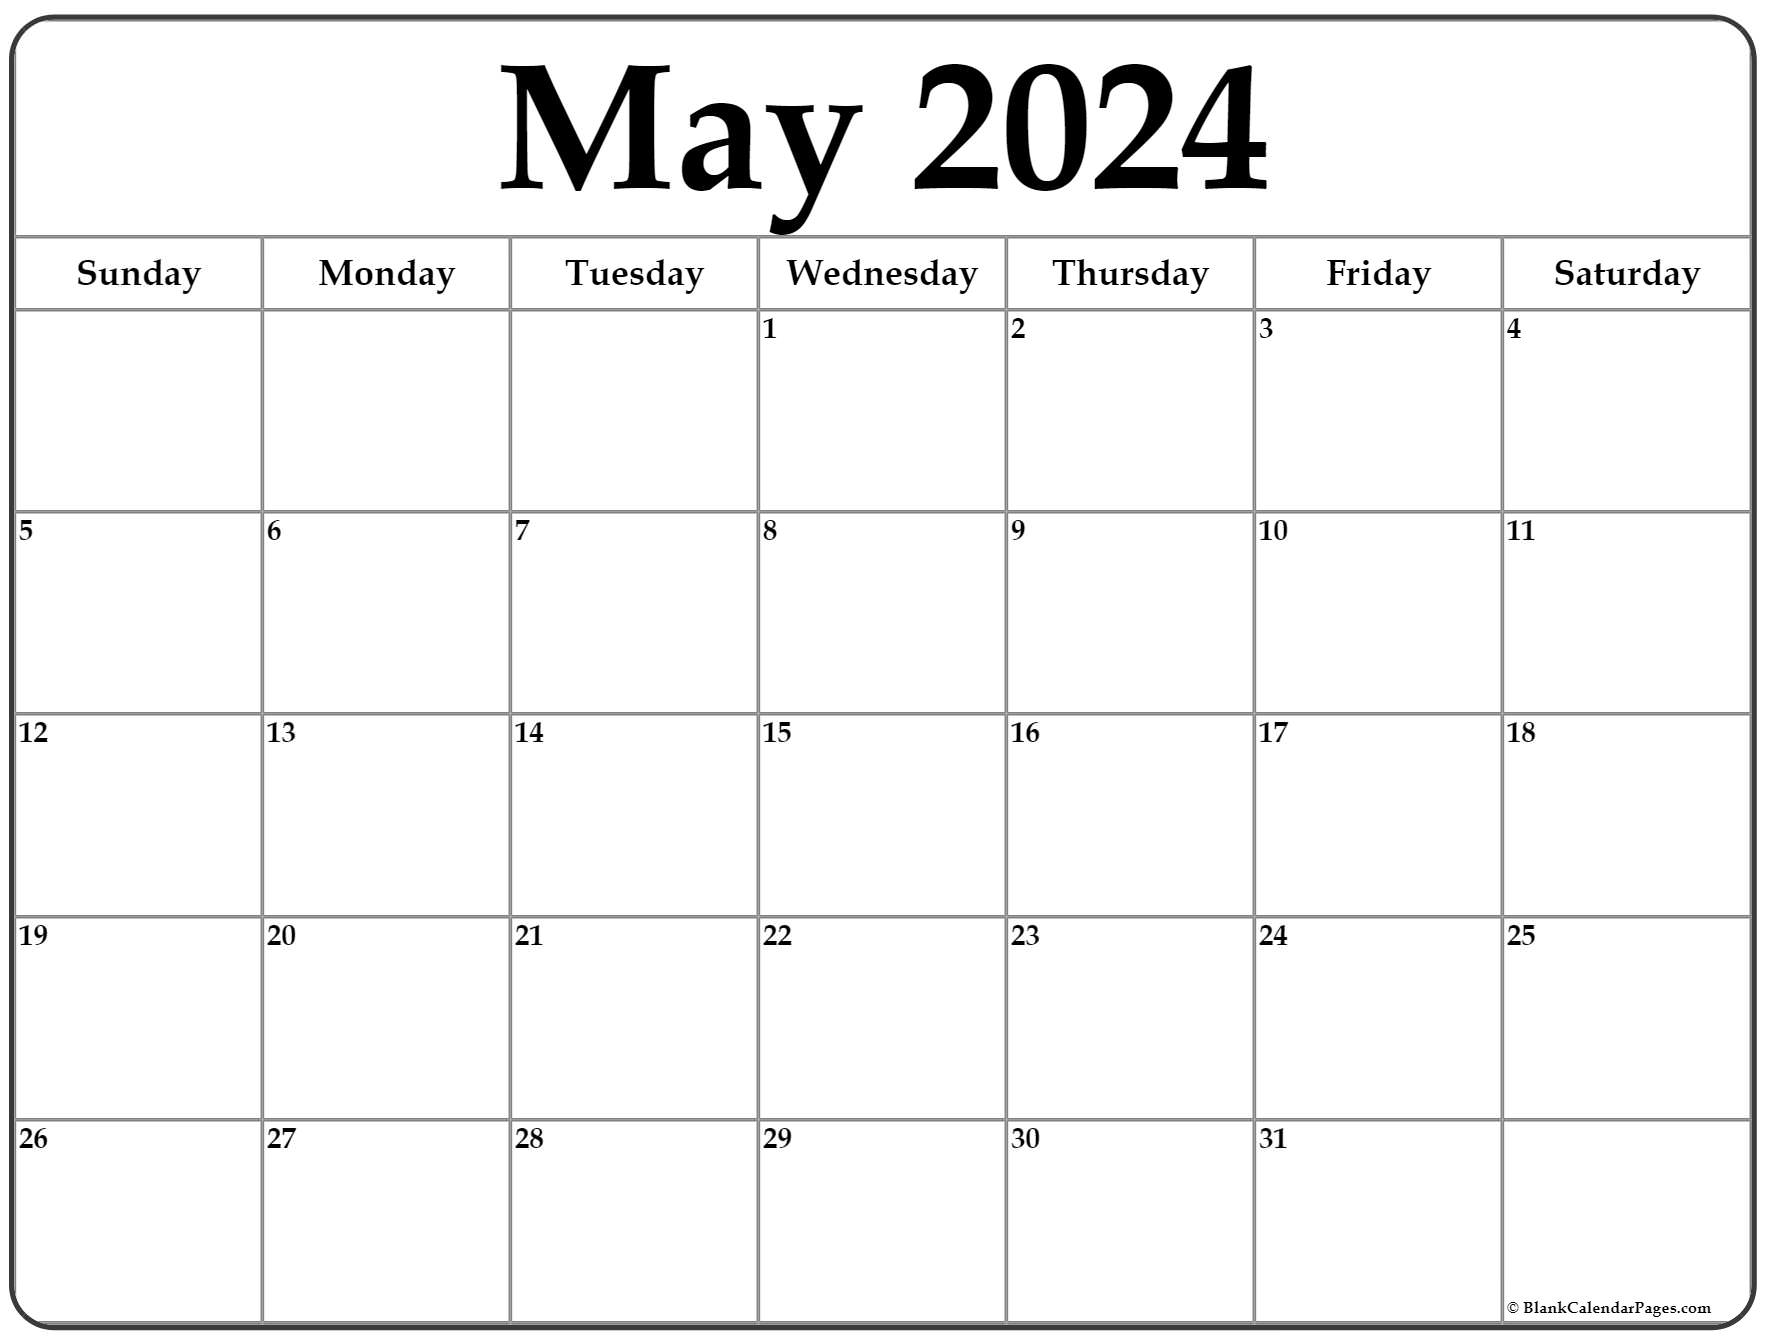 May Monthly Calendar 2022 May 2022 Calendar | Free Printable Calendar Templates